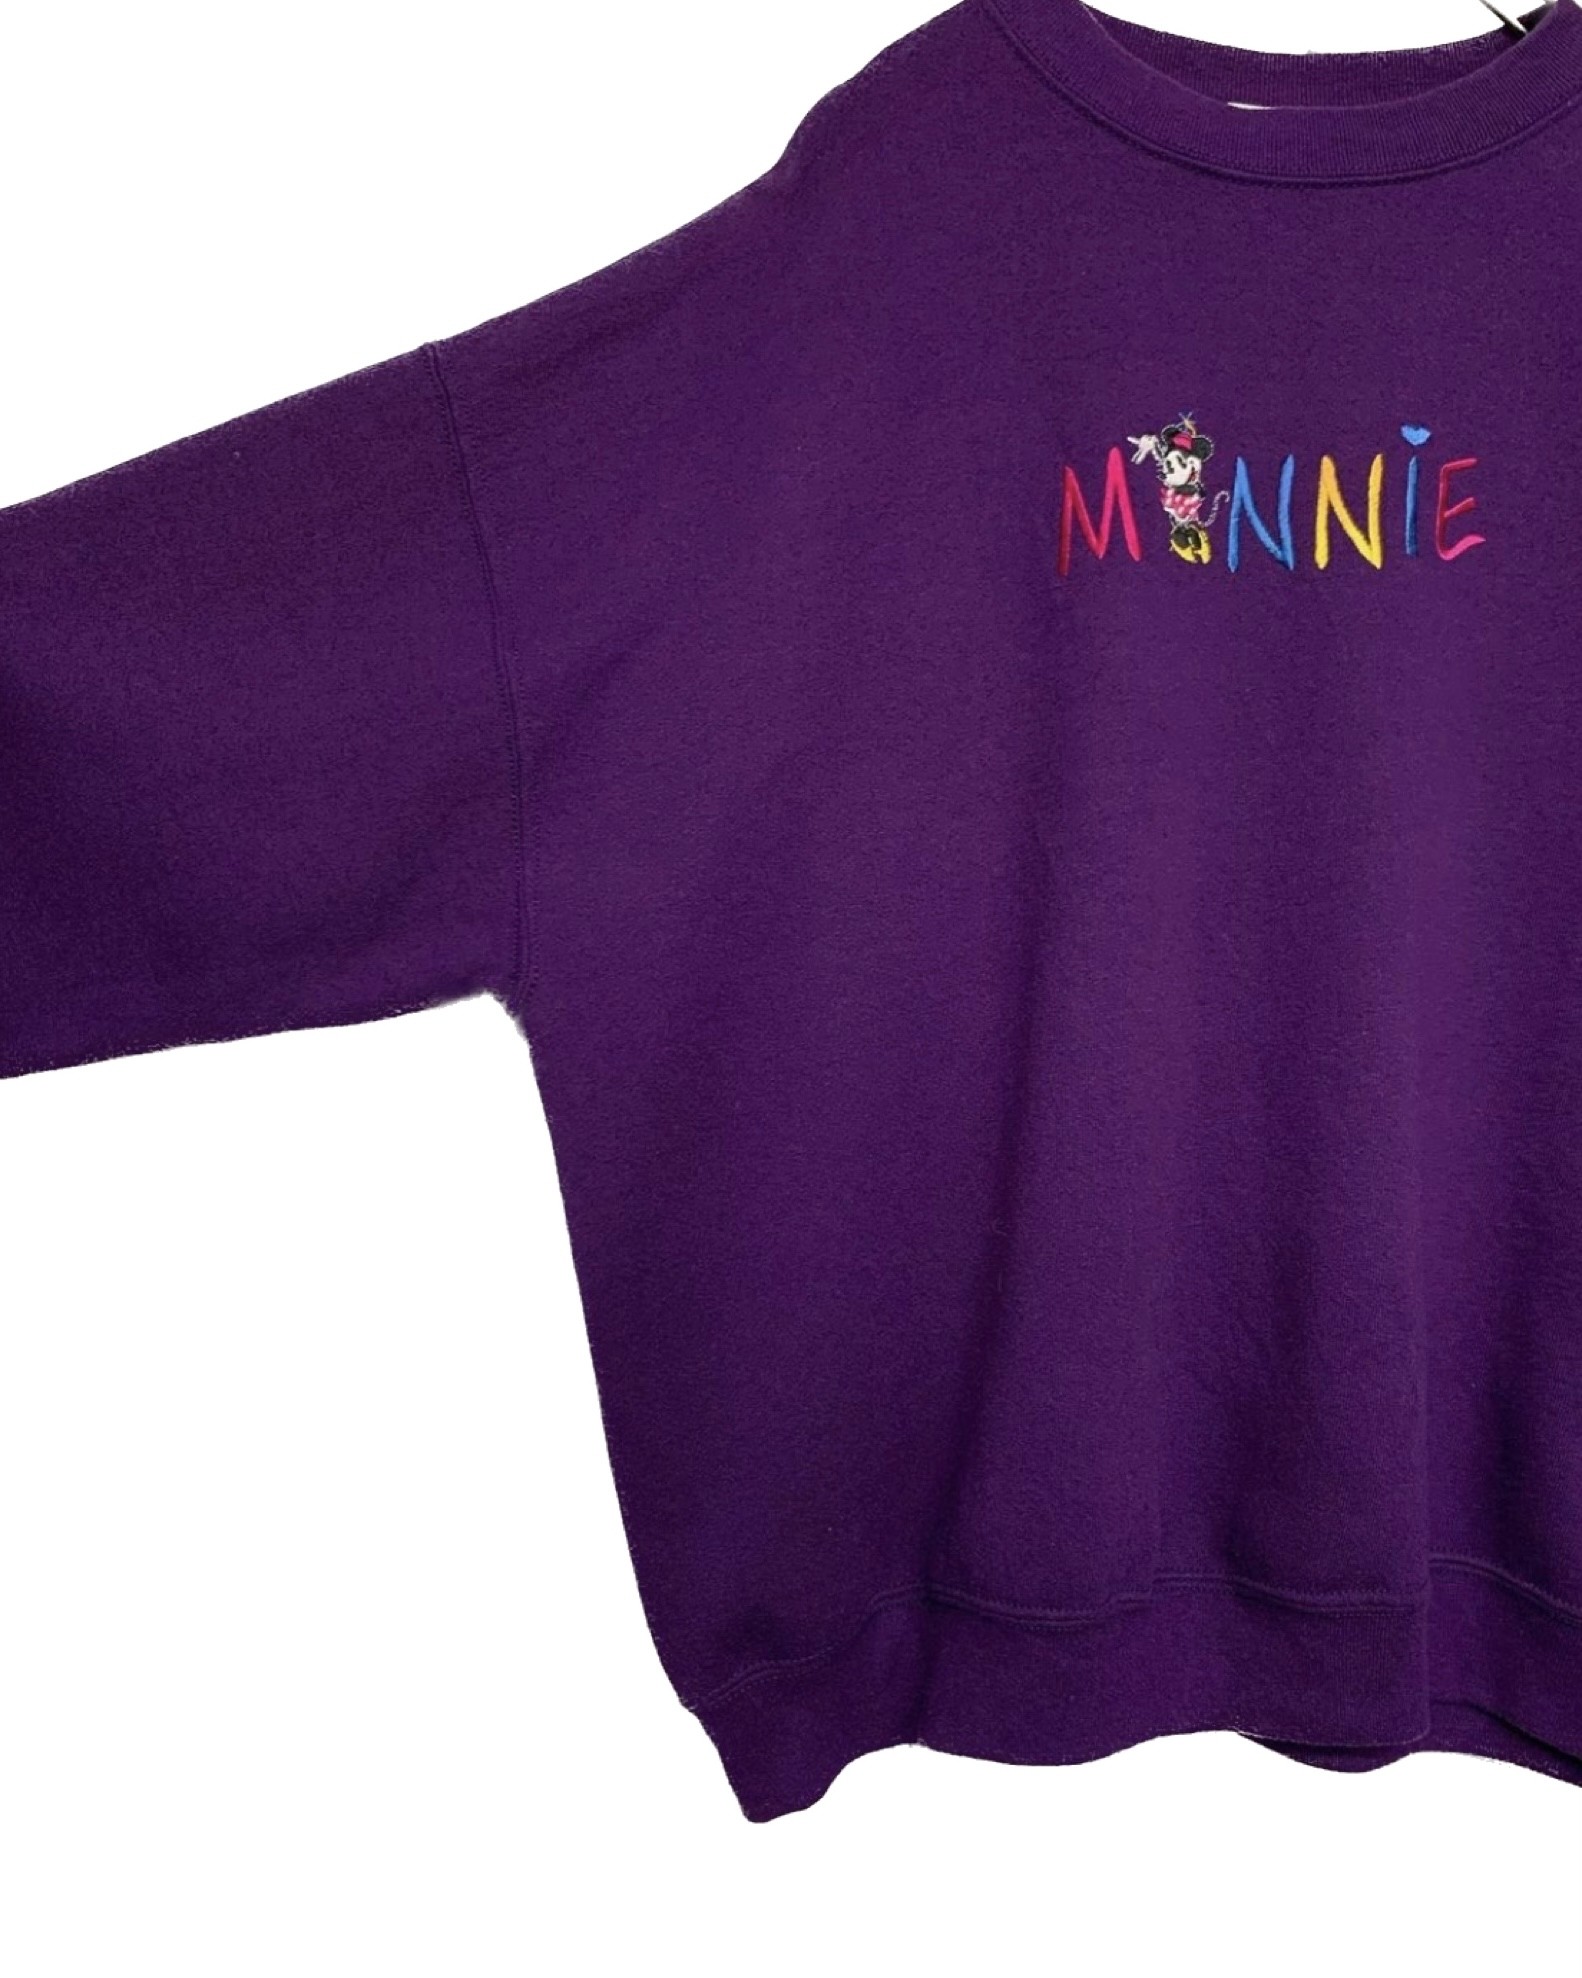 1990’s “Minnie” Embroidered Sweat Shirt